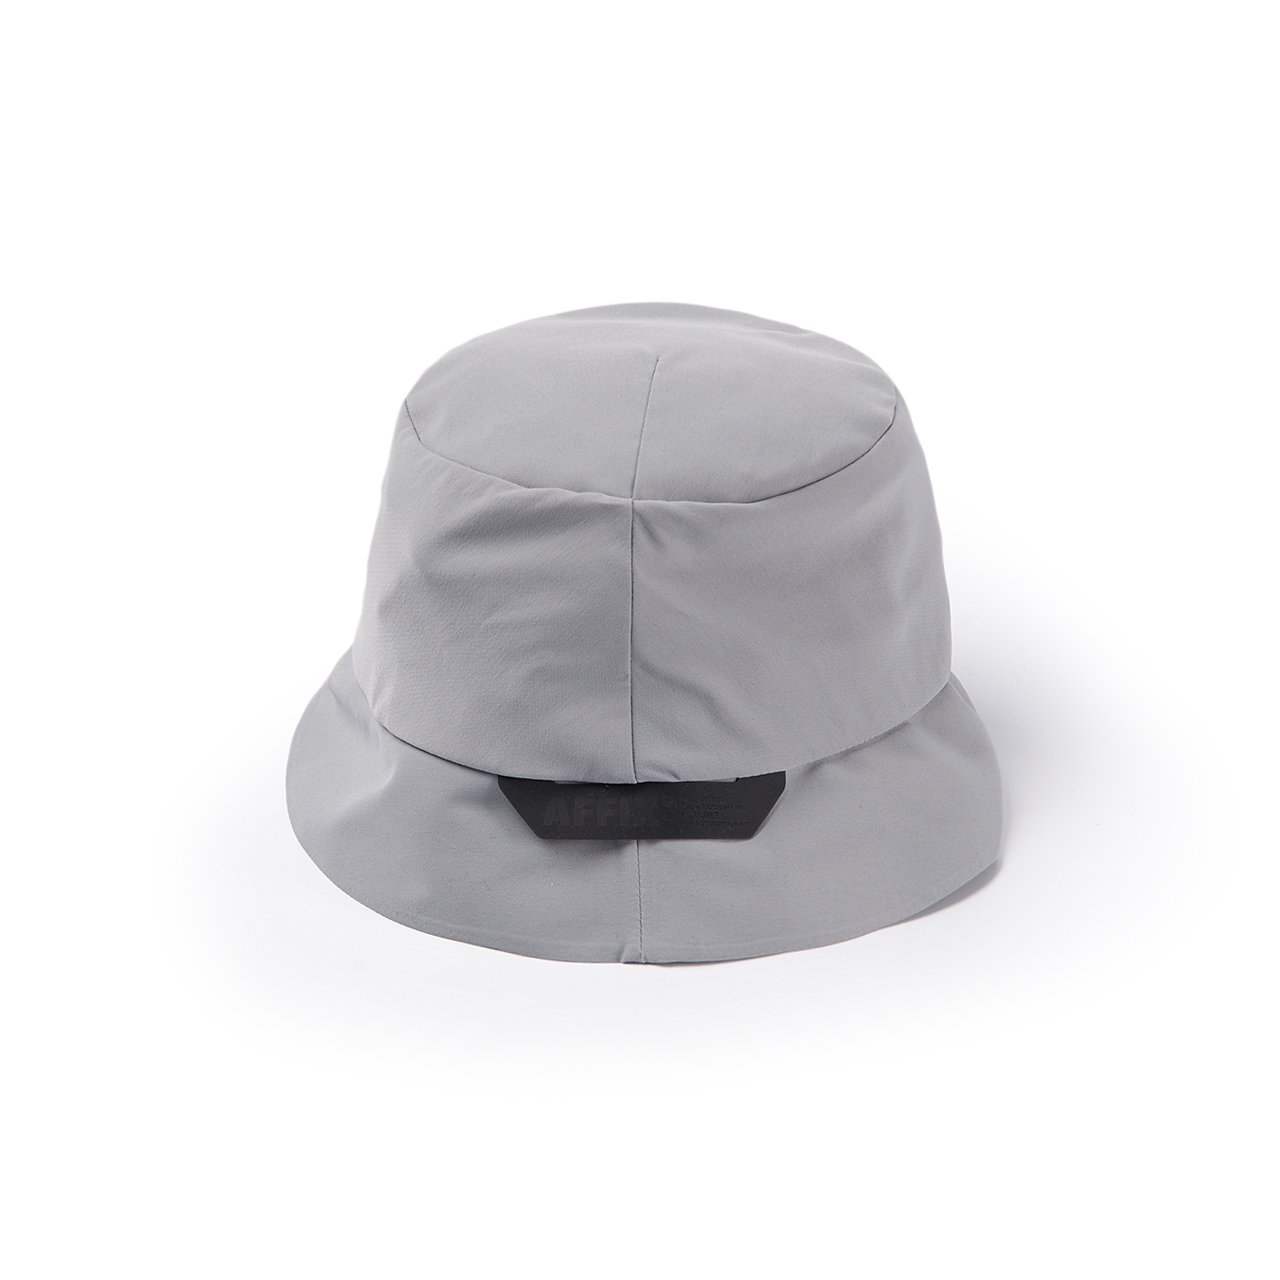 affix works affix works stow bucket hat (silver grey)